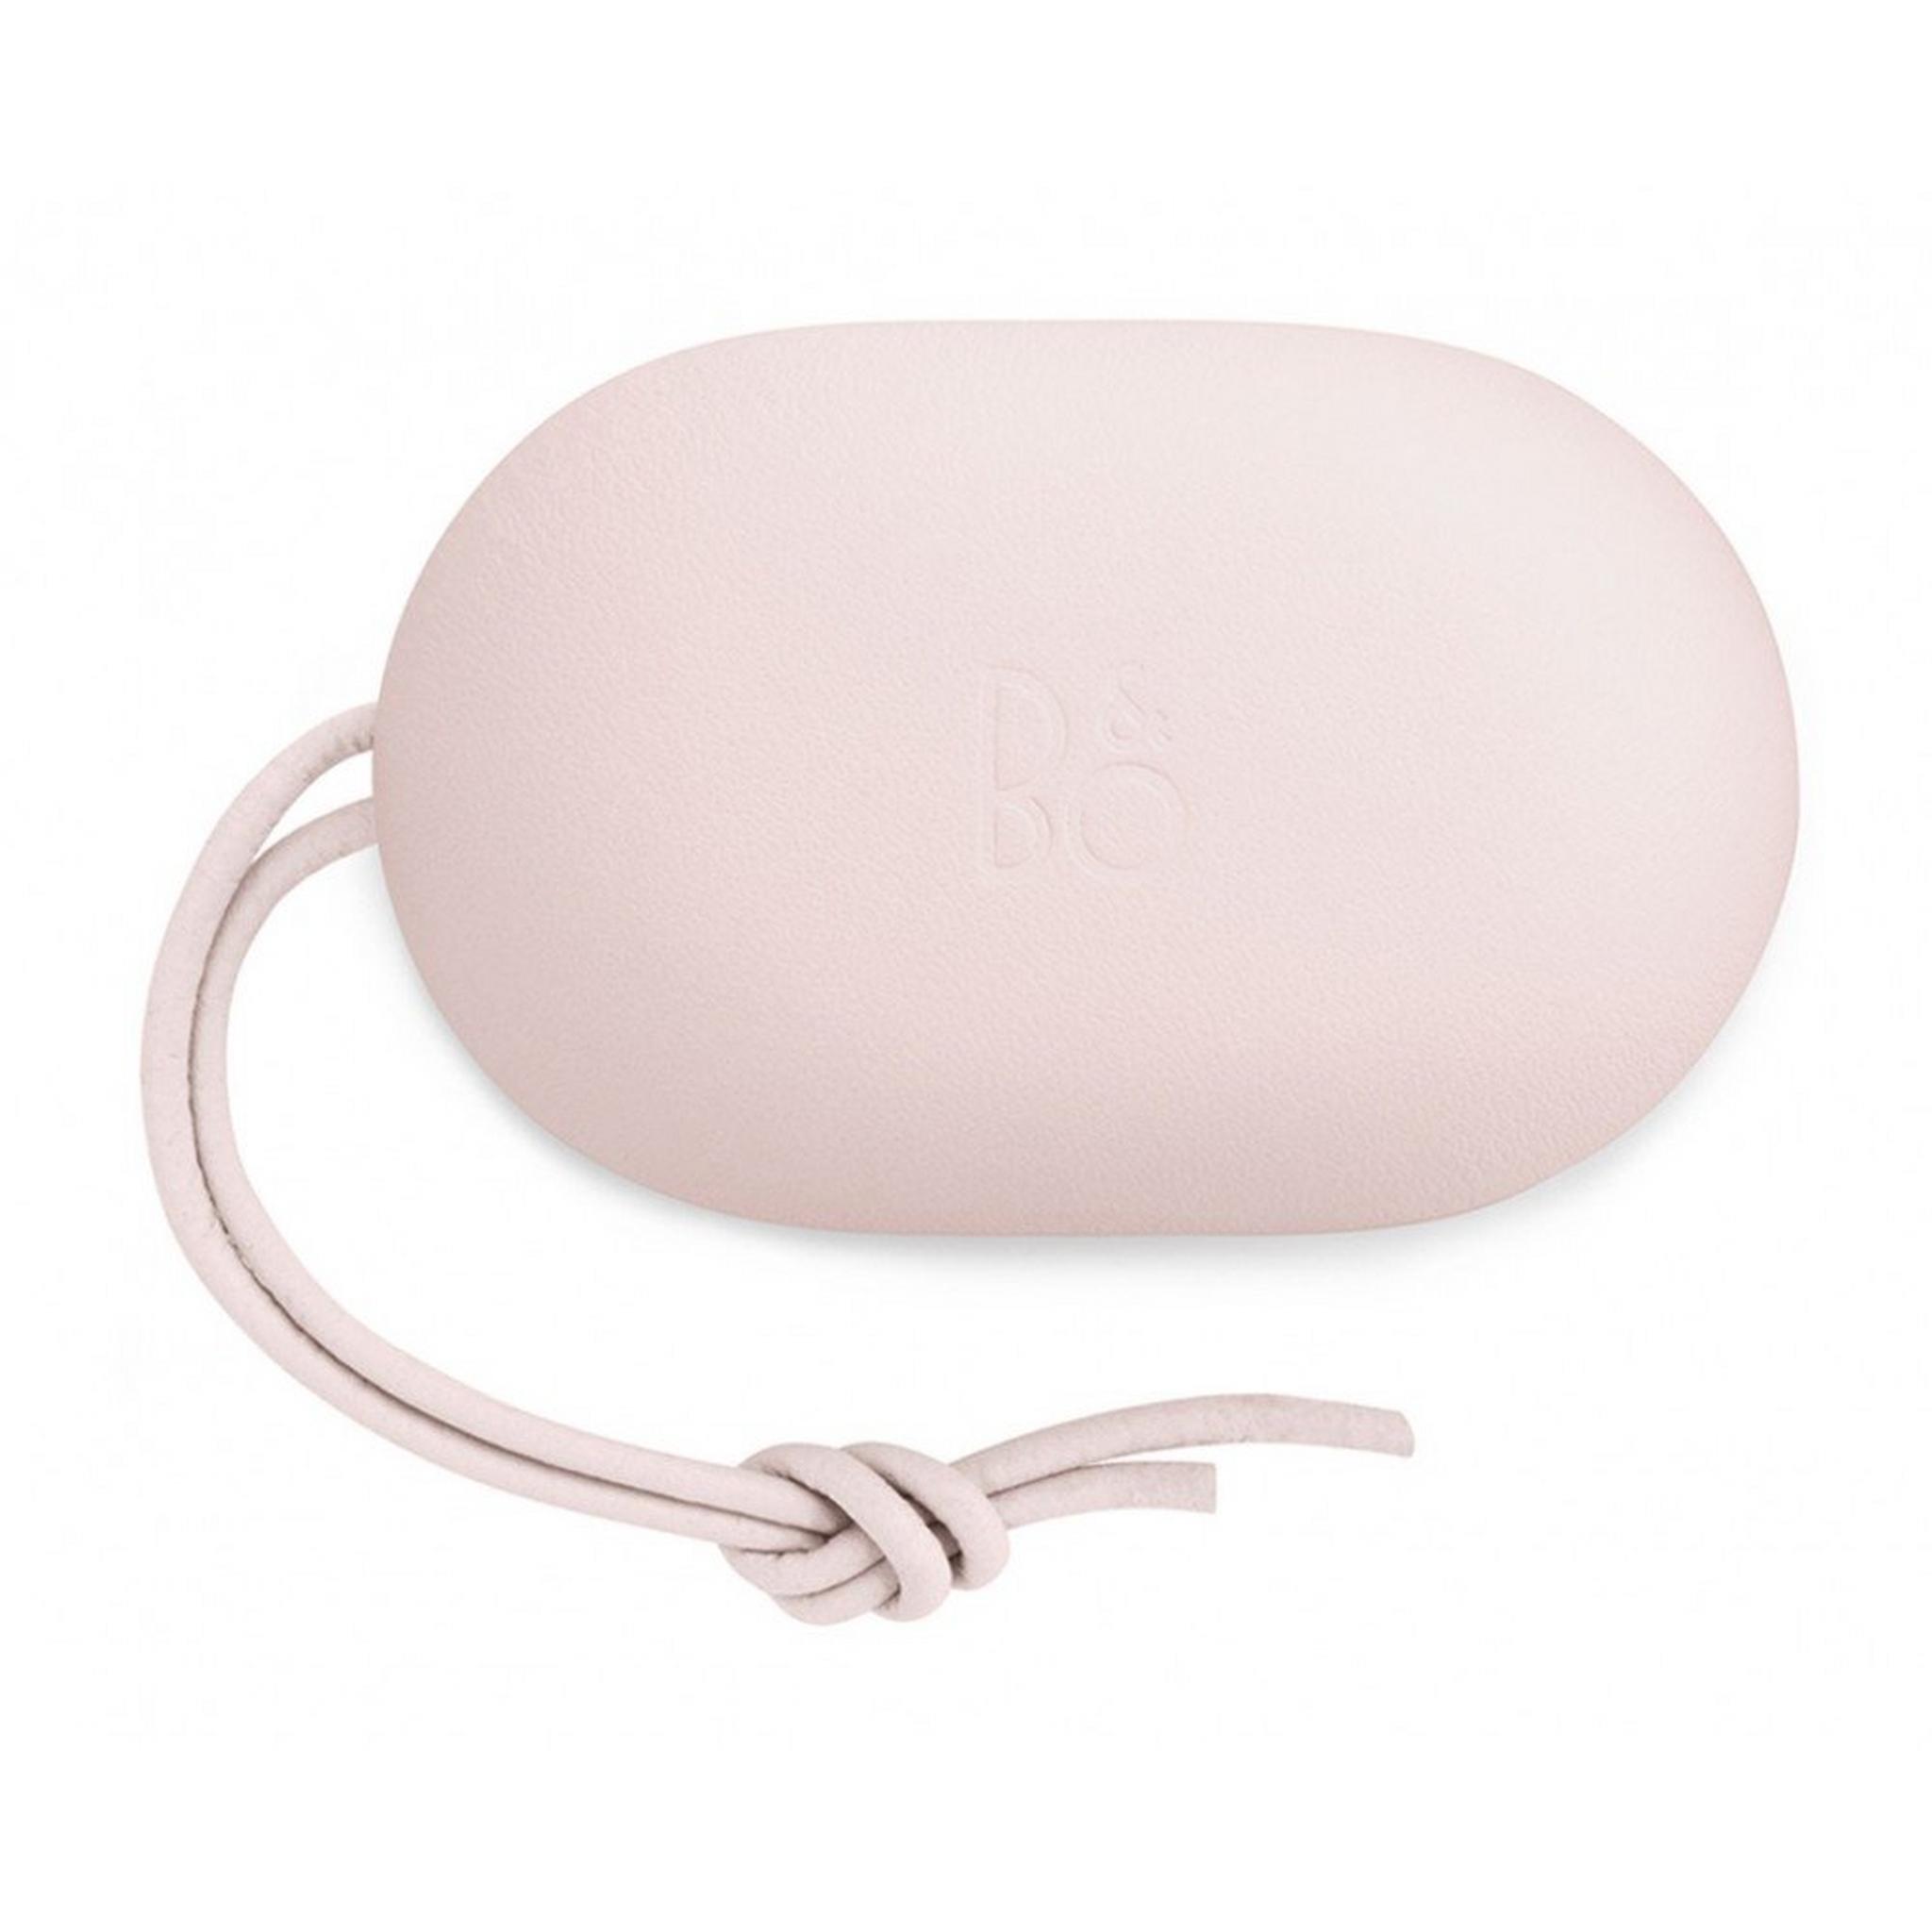 B&O Play Beoplay E8 Wireless Earphone - Pink